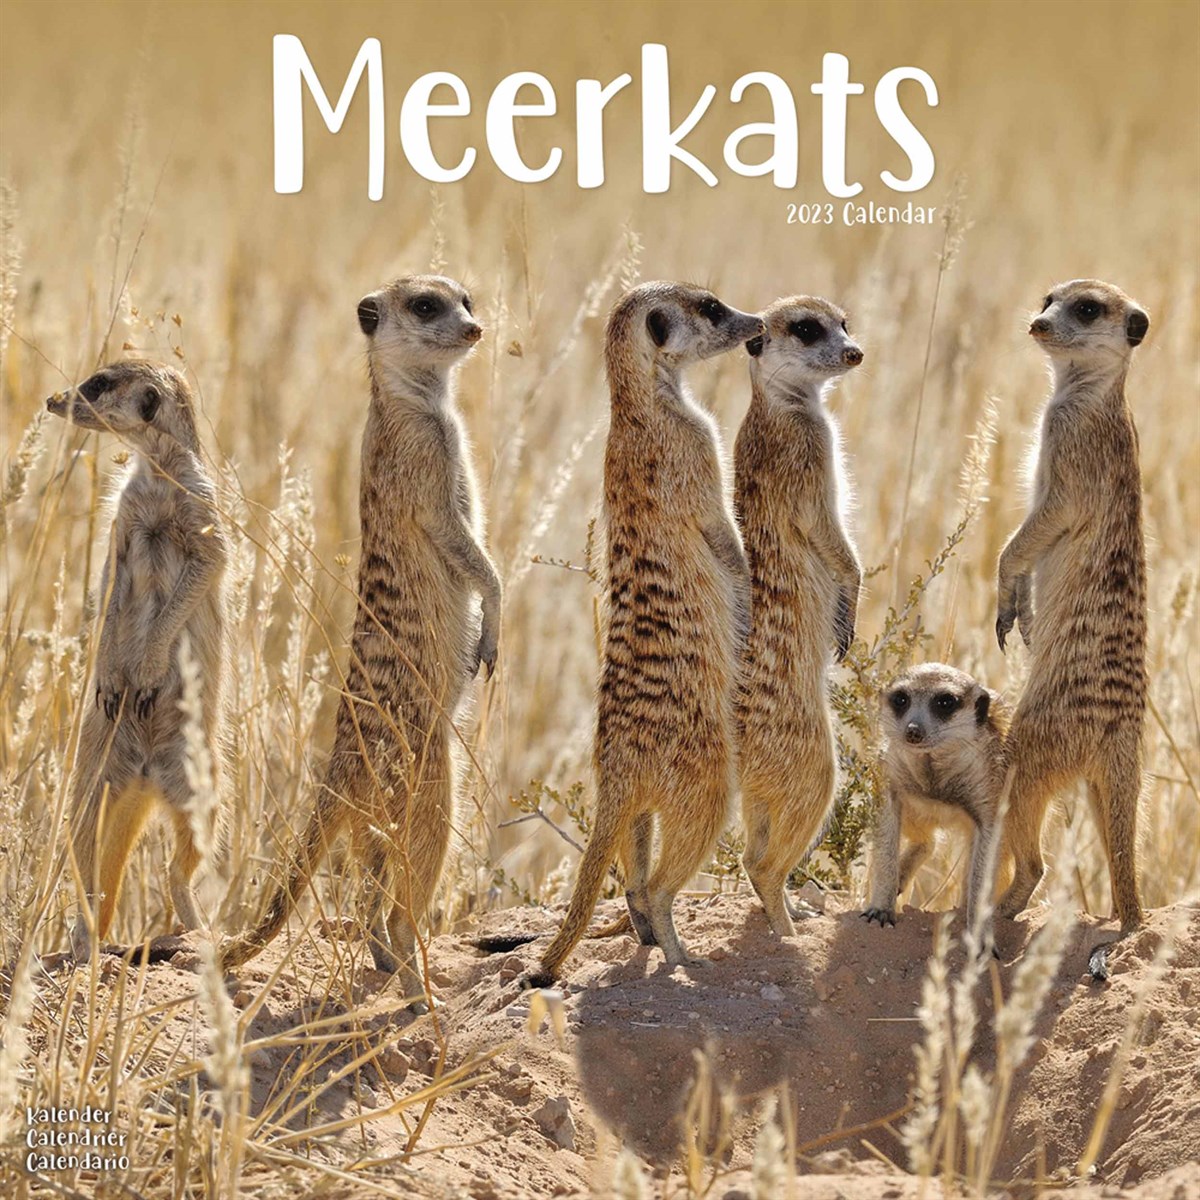 Meerkats 2023 Calendars